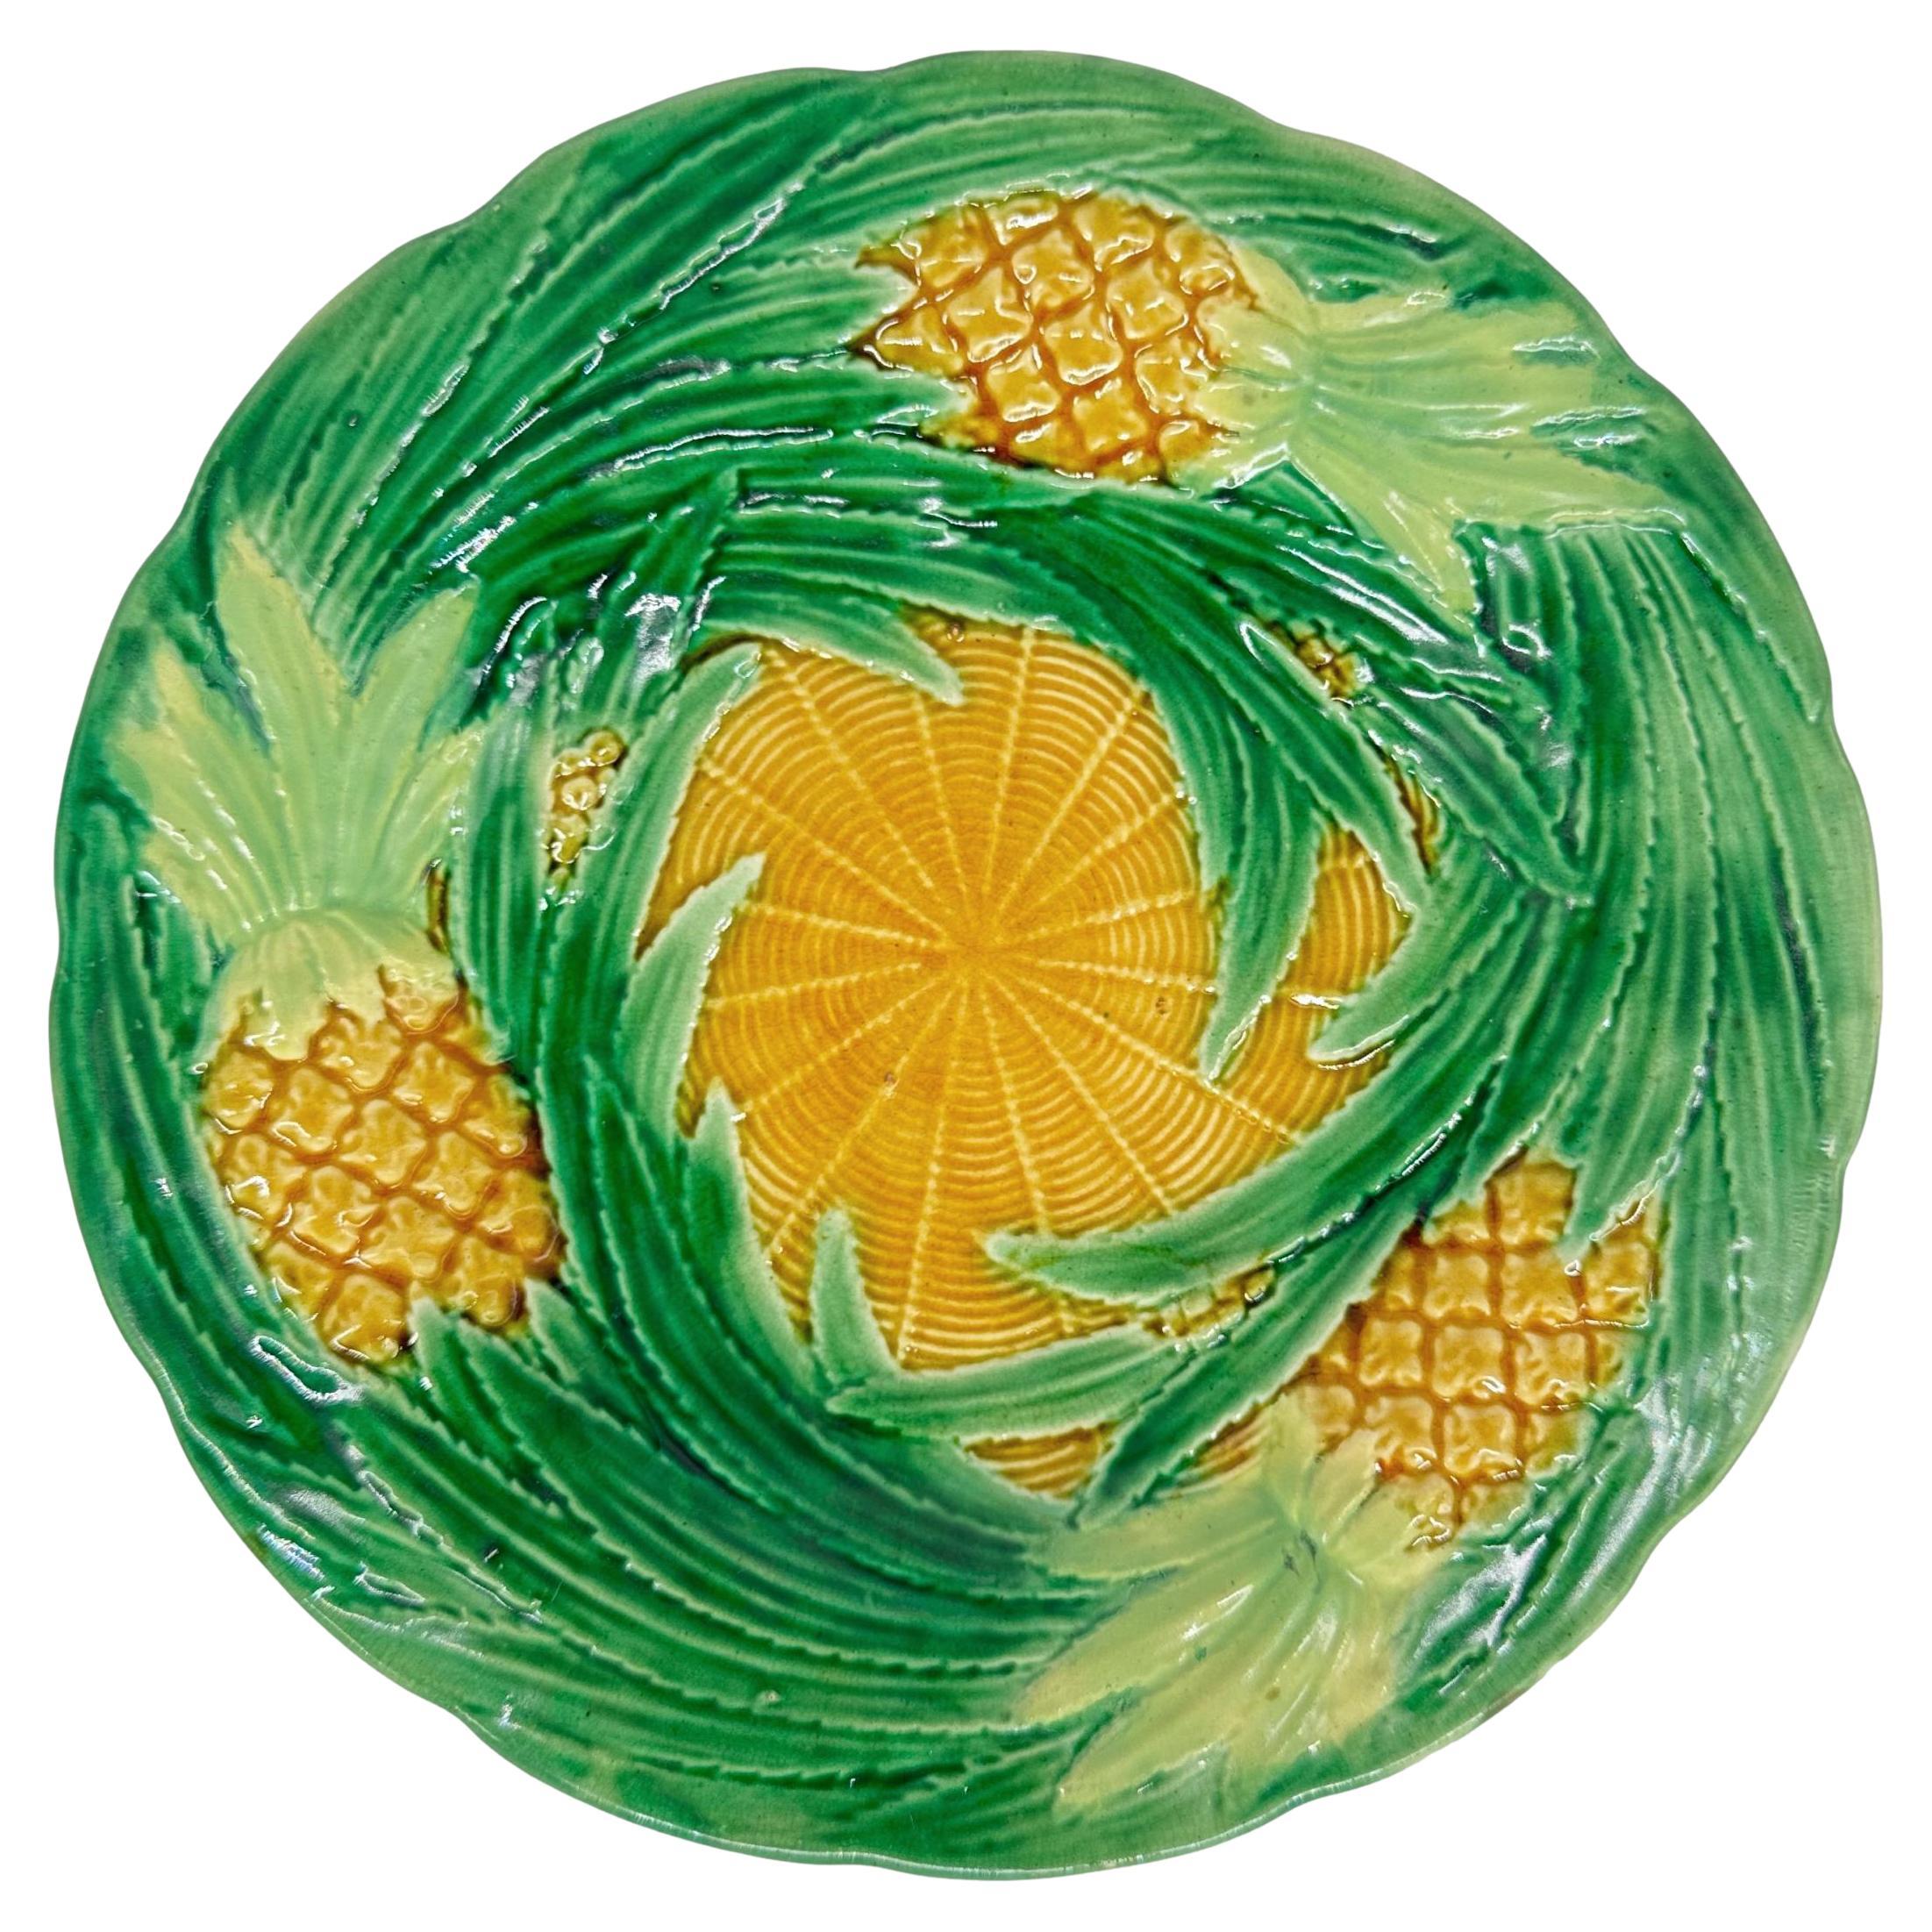 A George Jones Majolica Pineapples on Basketweave Plate, English, ca. 1870